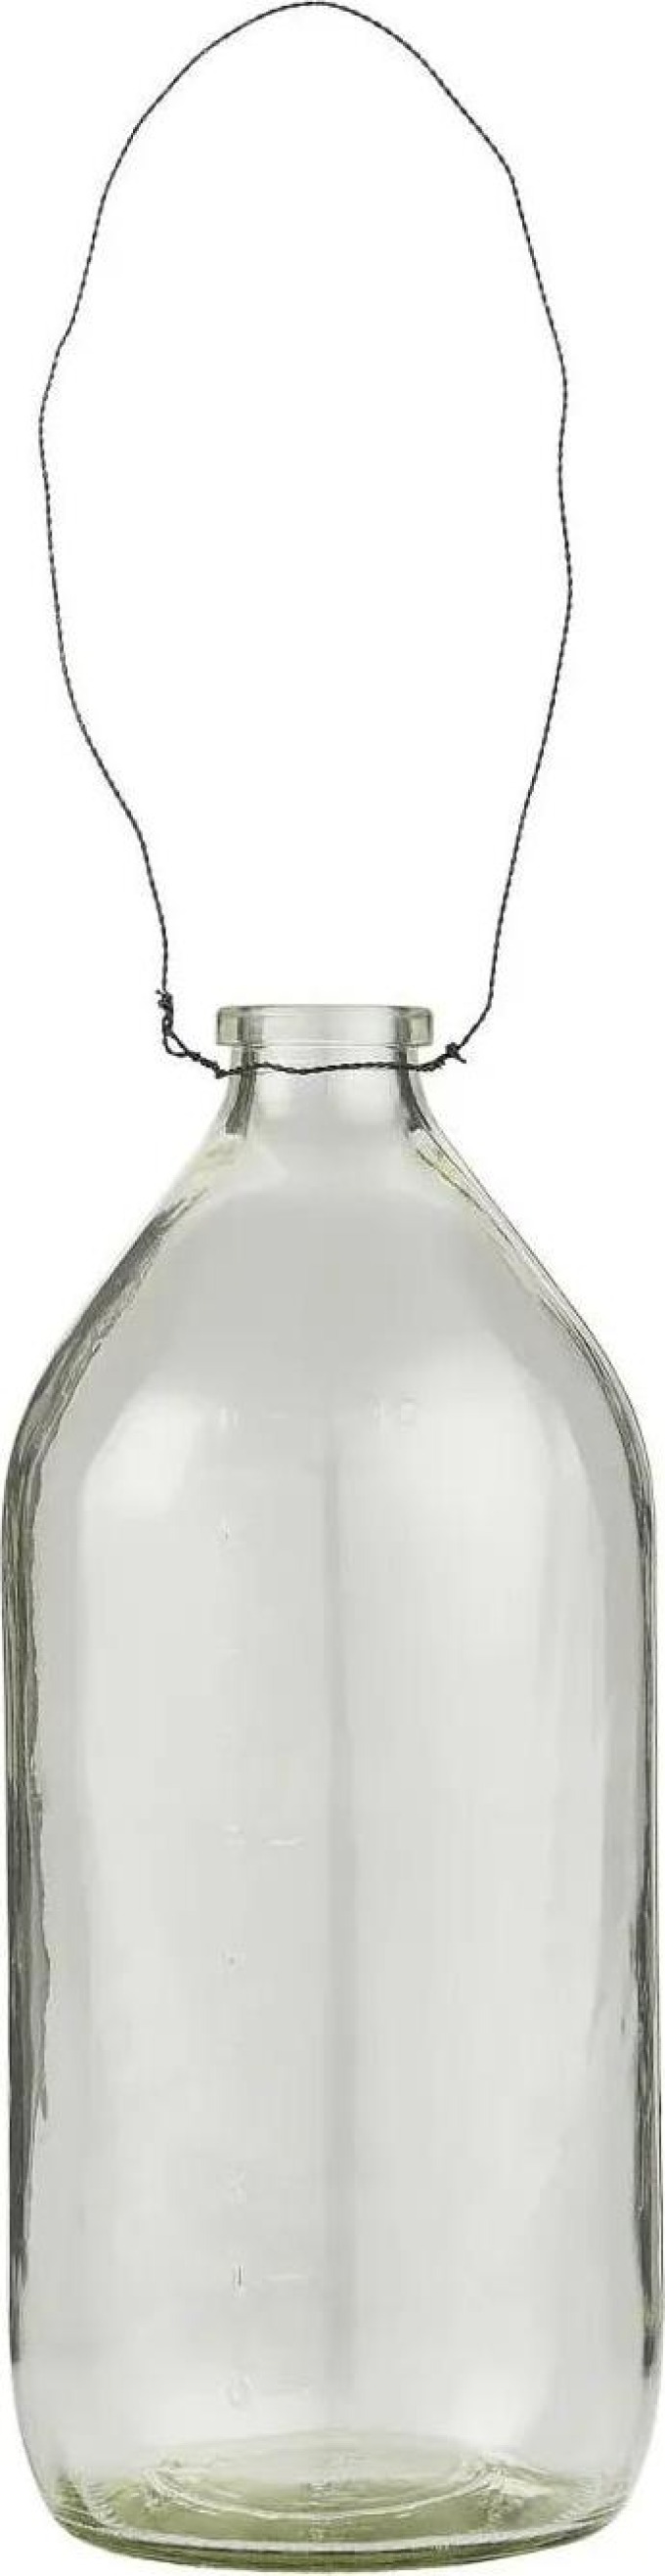 IB LAURSEN Závěsná váza Bottle Wire 1 l, čirá barva, sklo